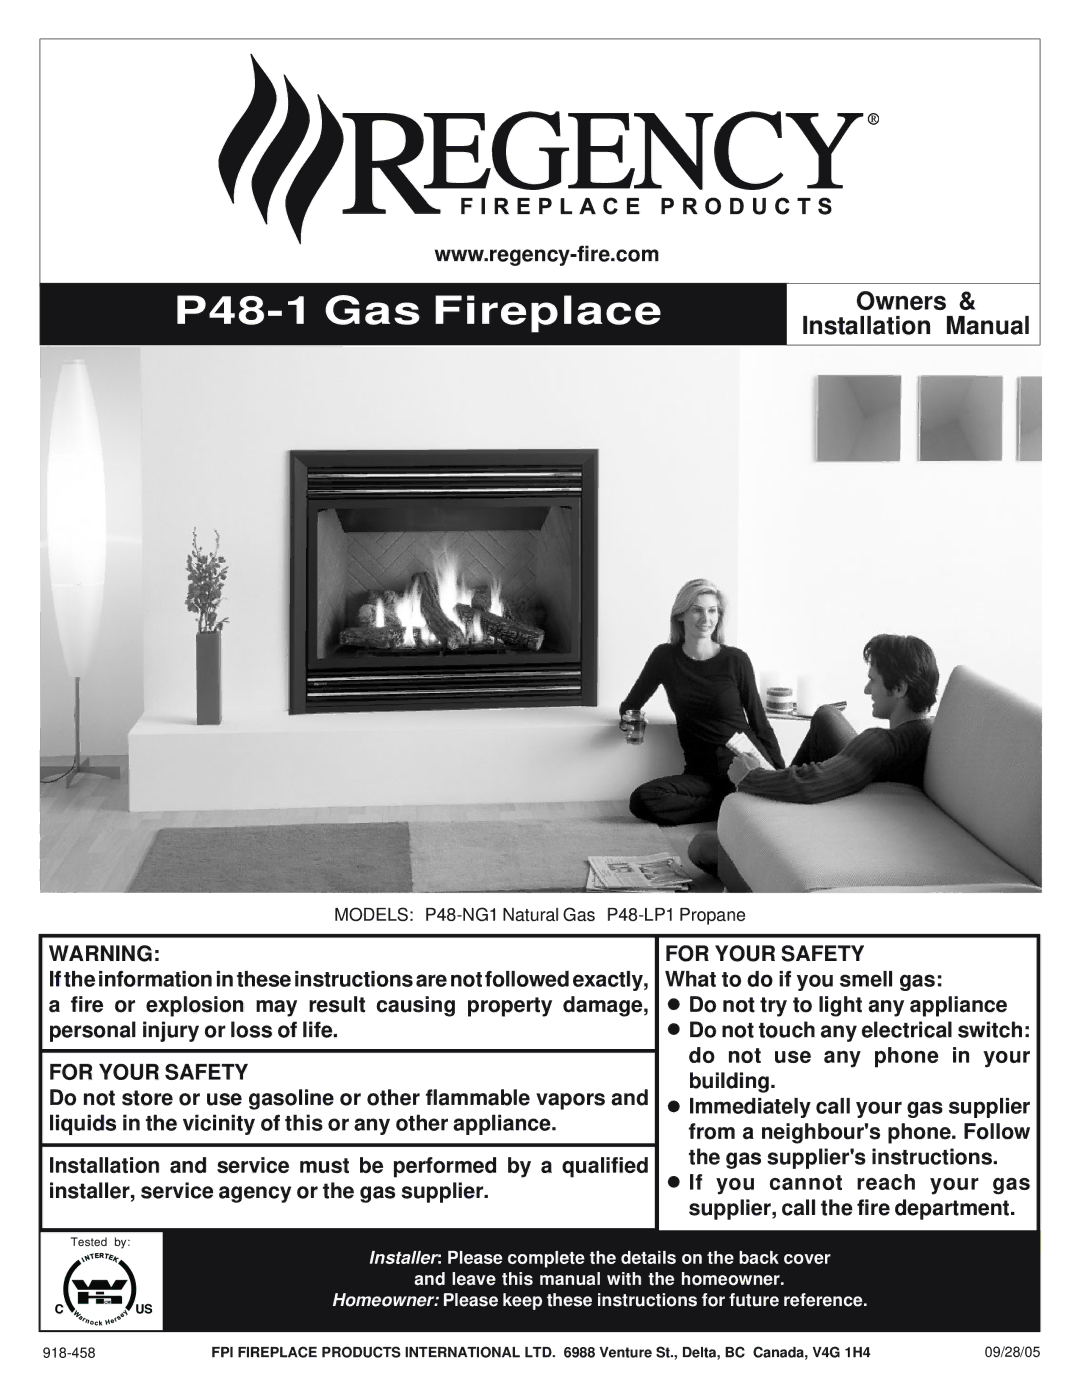 Regency installation manual P48-1 Gas Fireplace 